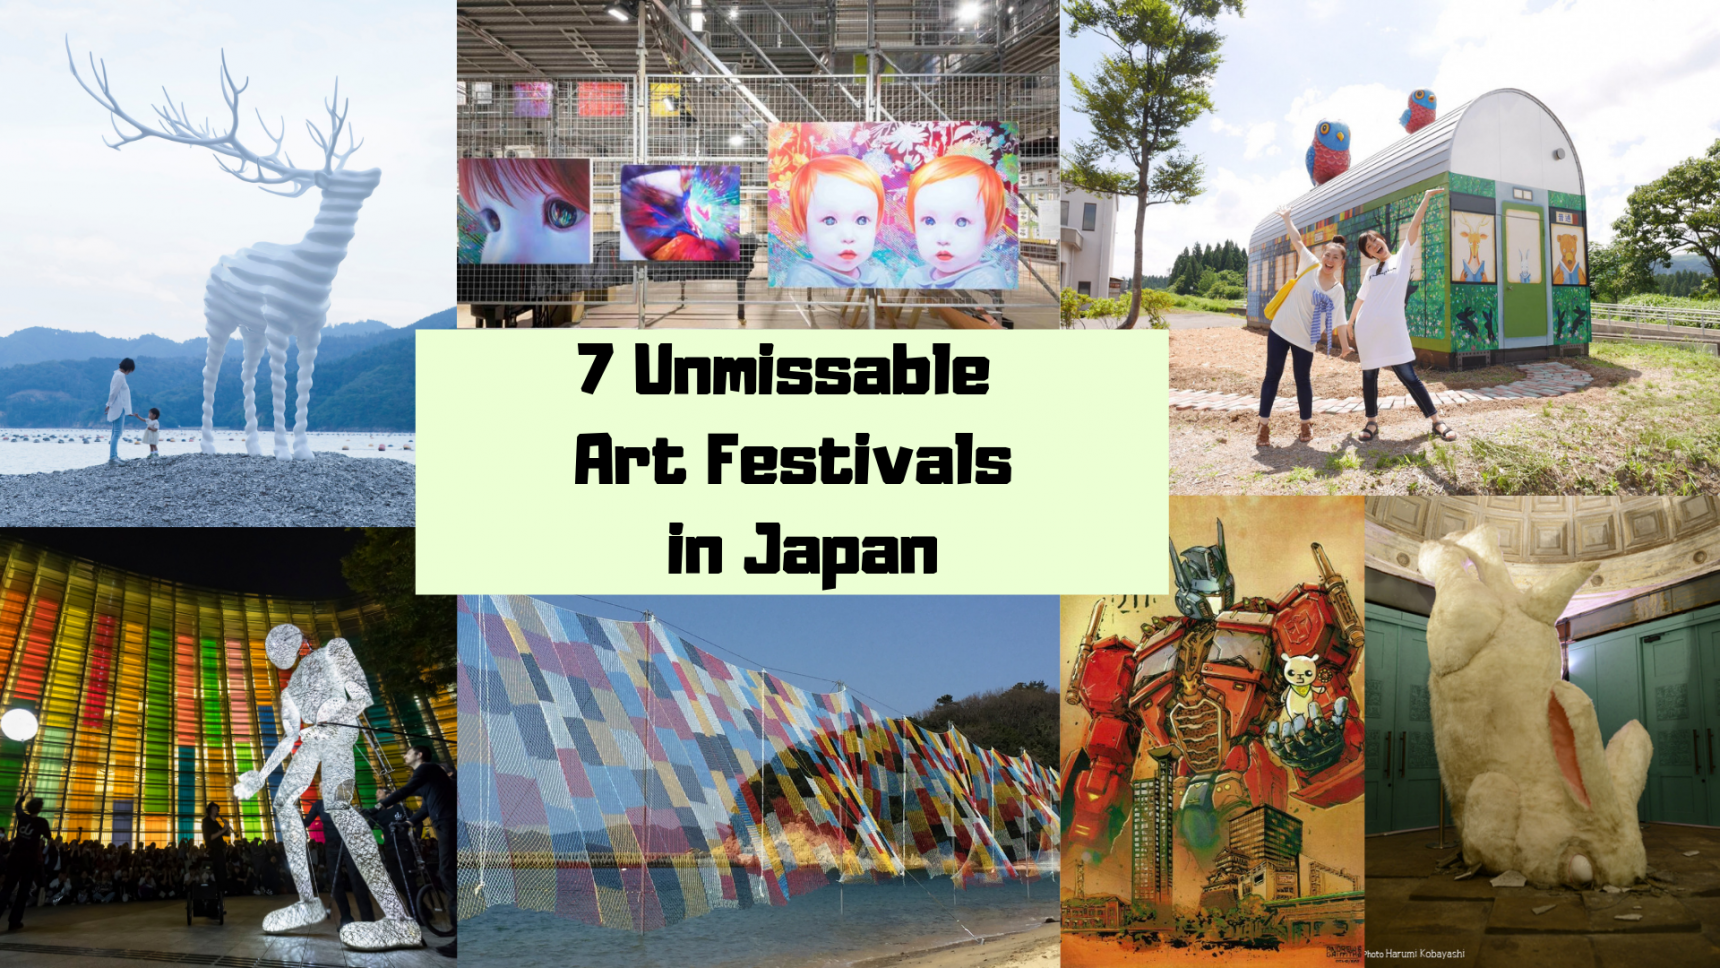 7 Unmissable Art Festivals in Japan